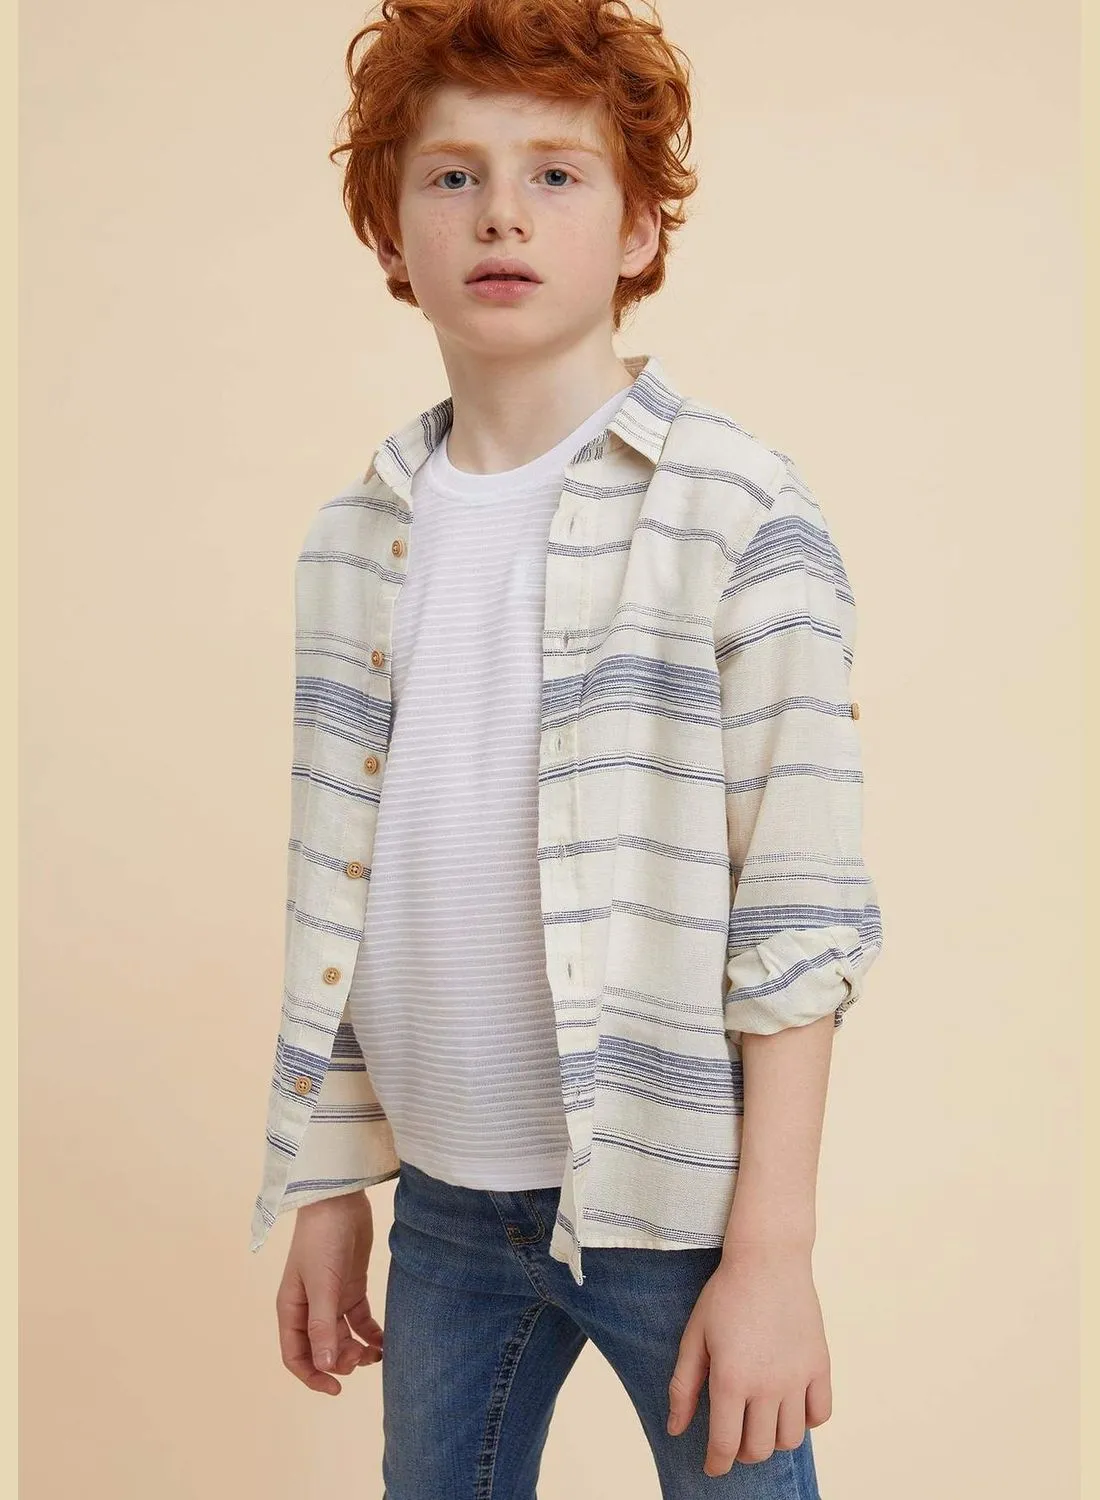 DeFacto Boy Woven Top Regular Fit Polo Neck Long Sleeve Shirt